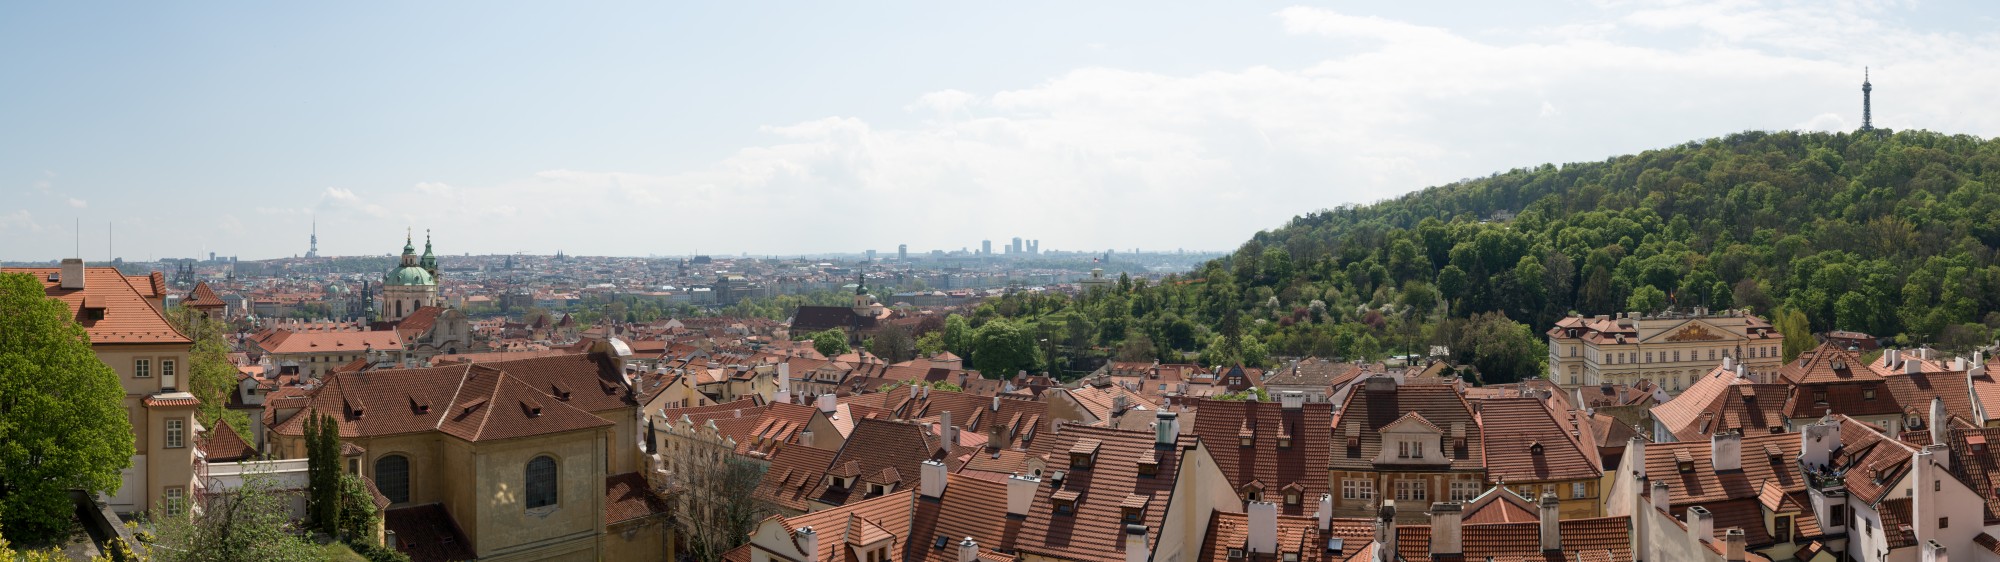 Praha Panorama from Hradčany 20170430 02